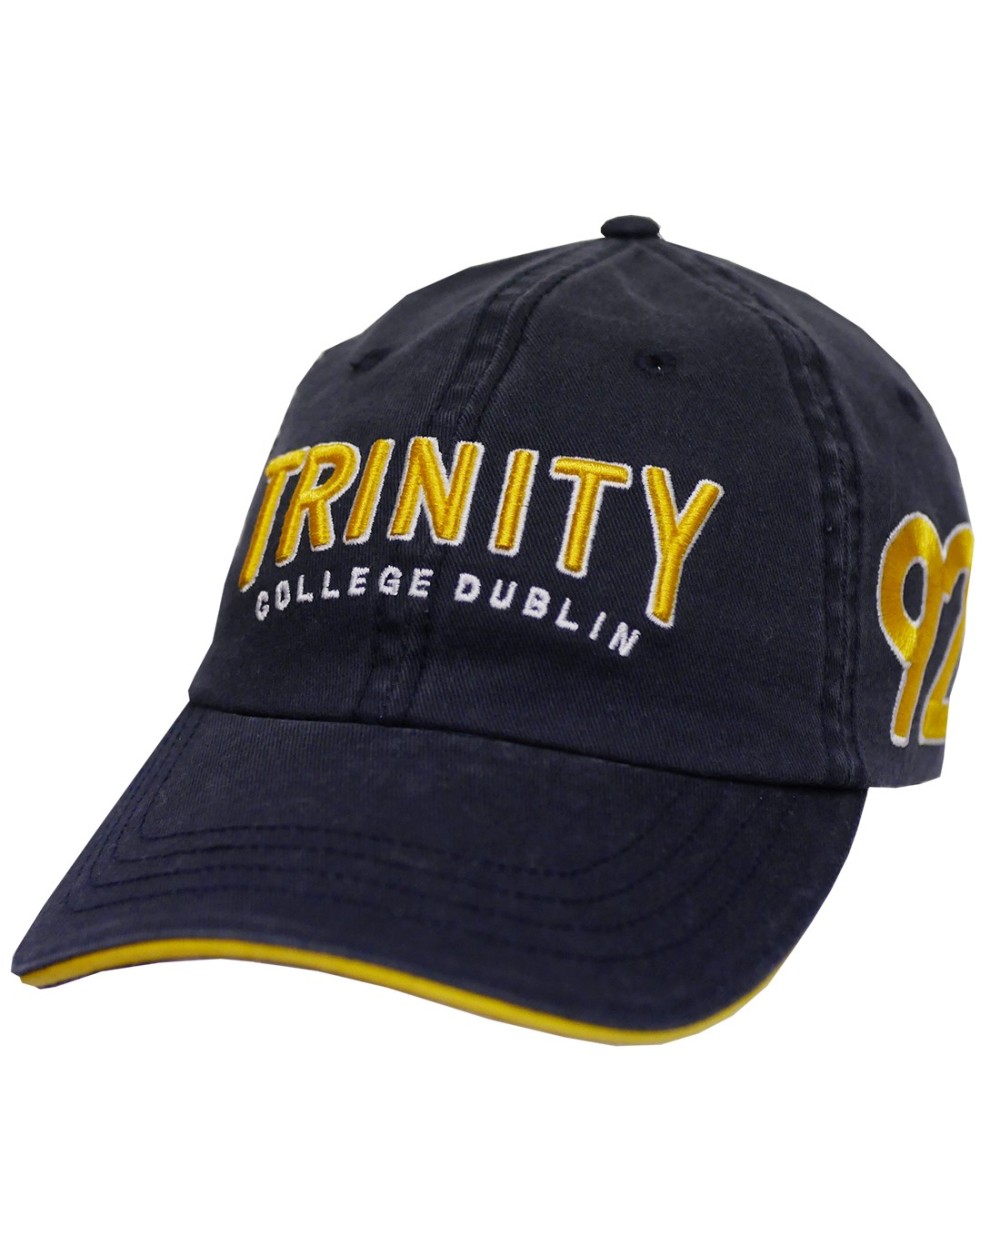 Trinity College Dublin Navy/ Mustard Washed baseball Cap